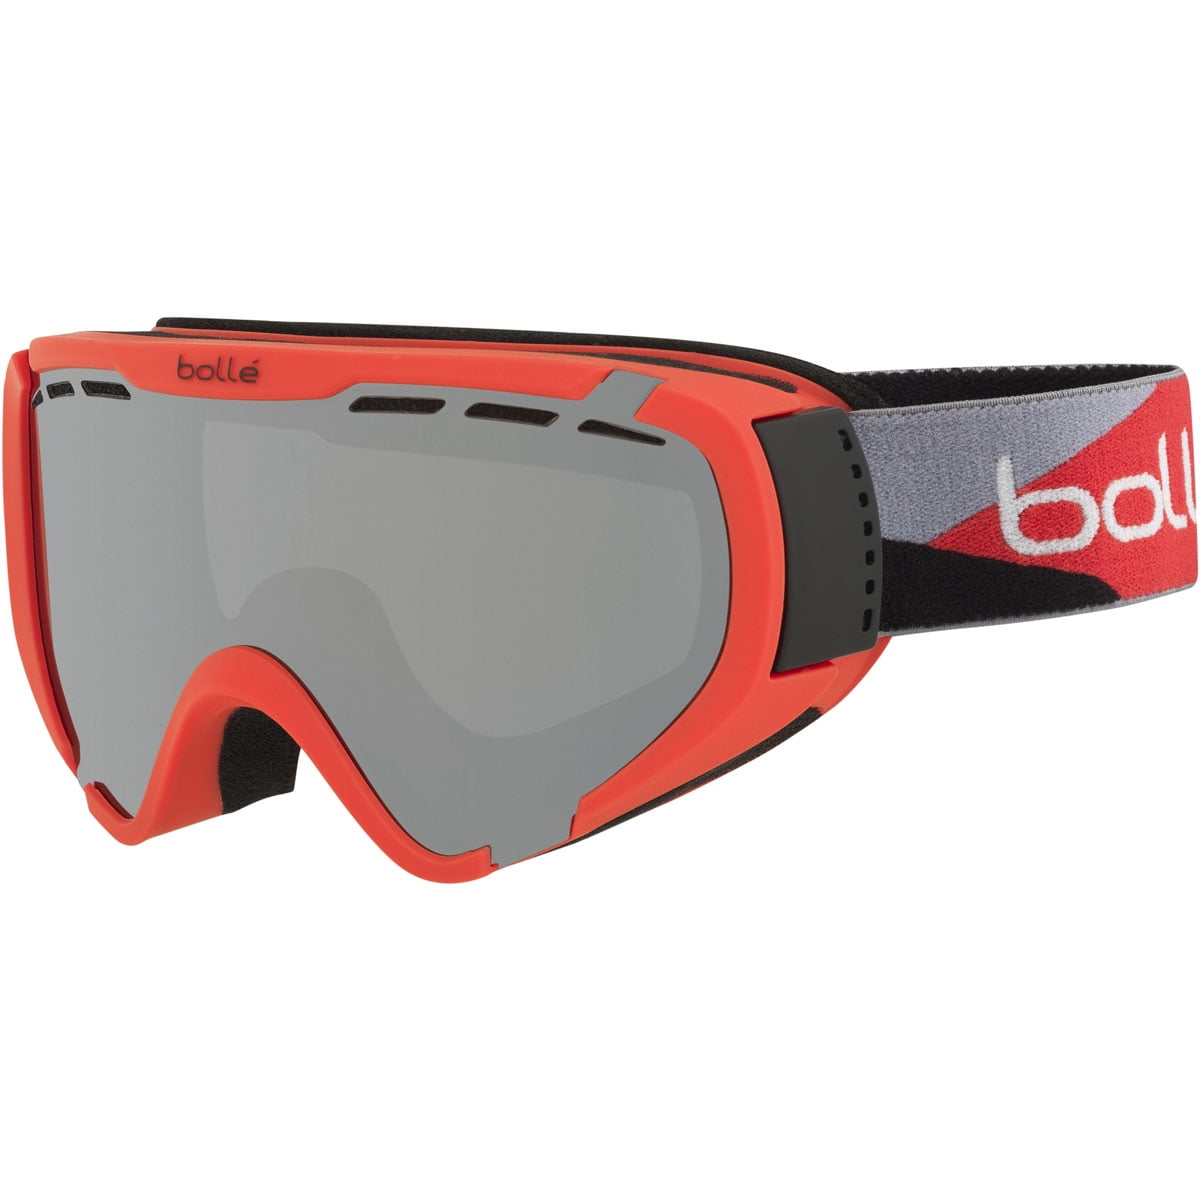 Bolle Snowboard Ski Googles Adjustable Strap w/Extra High Contrast Lens NEW 